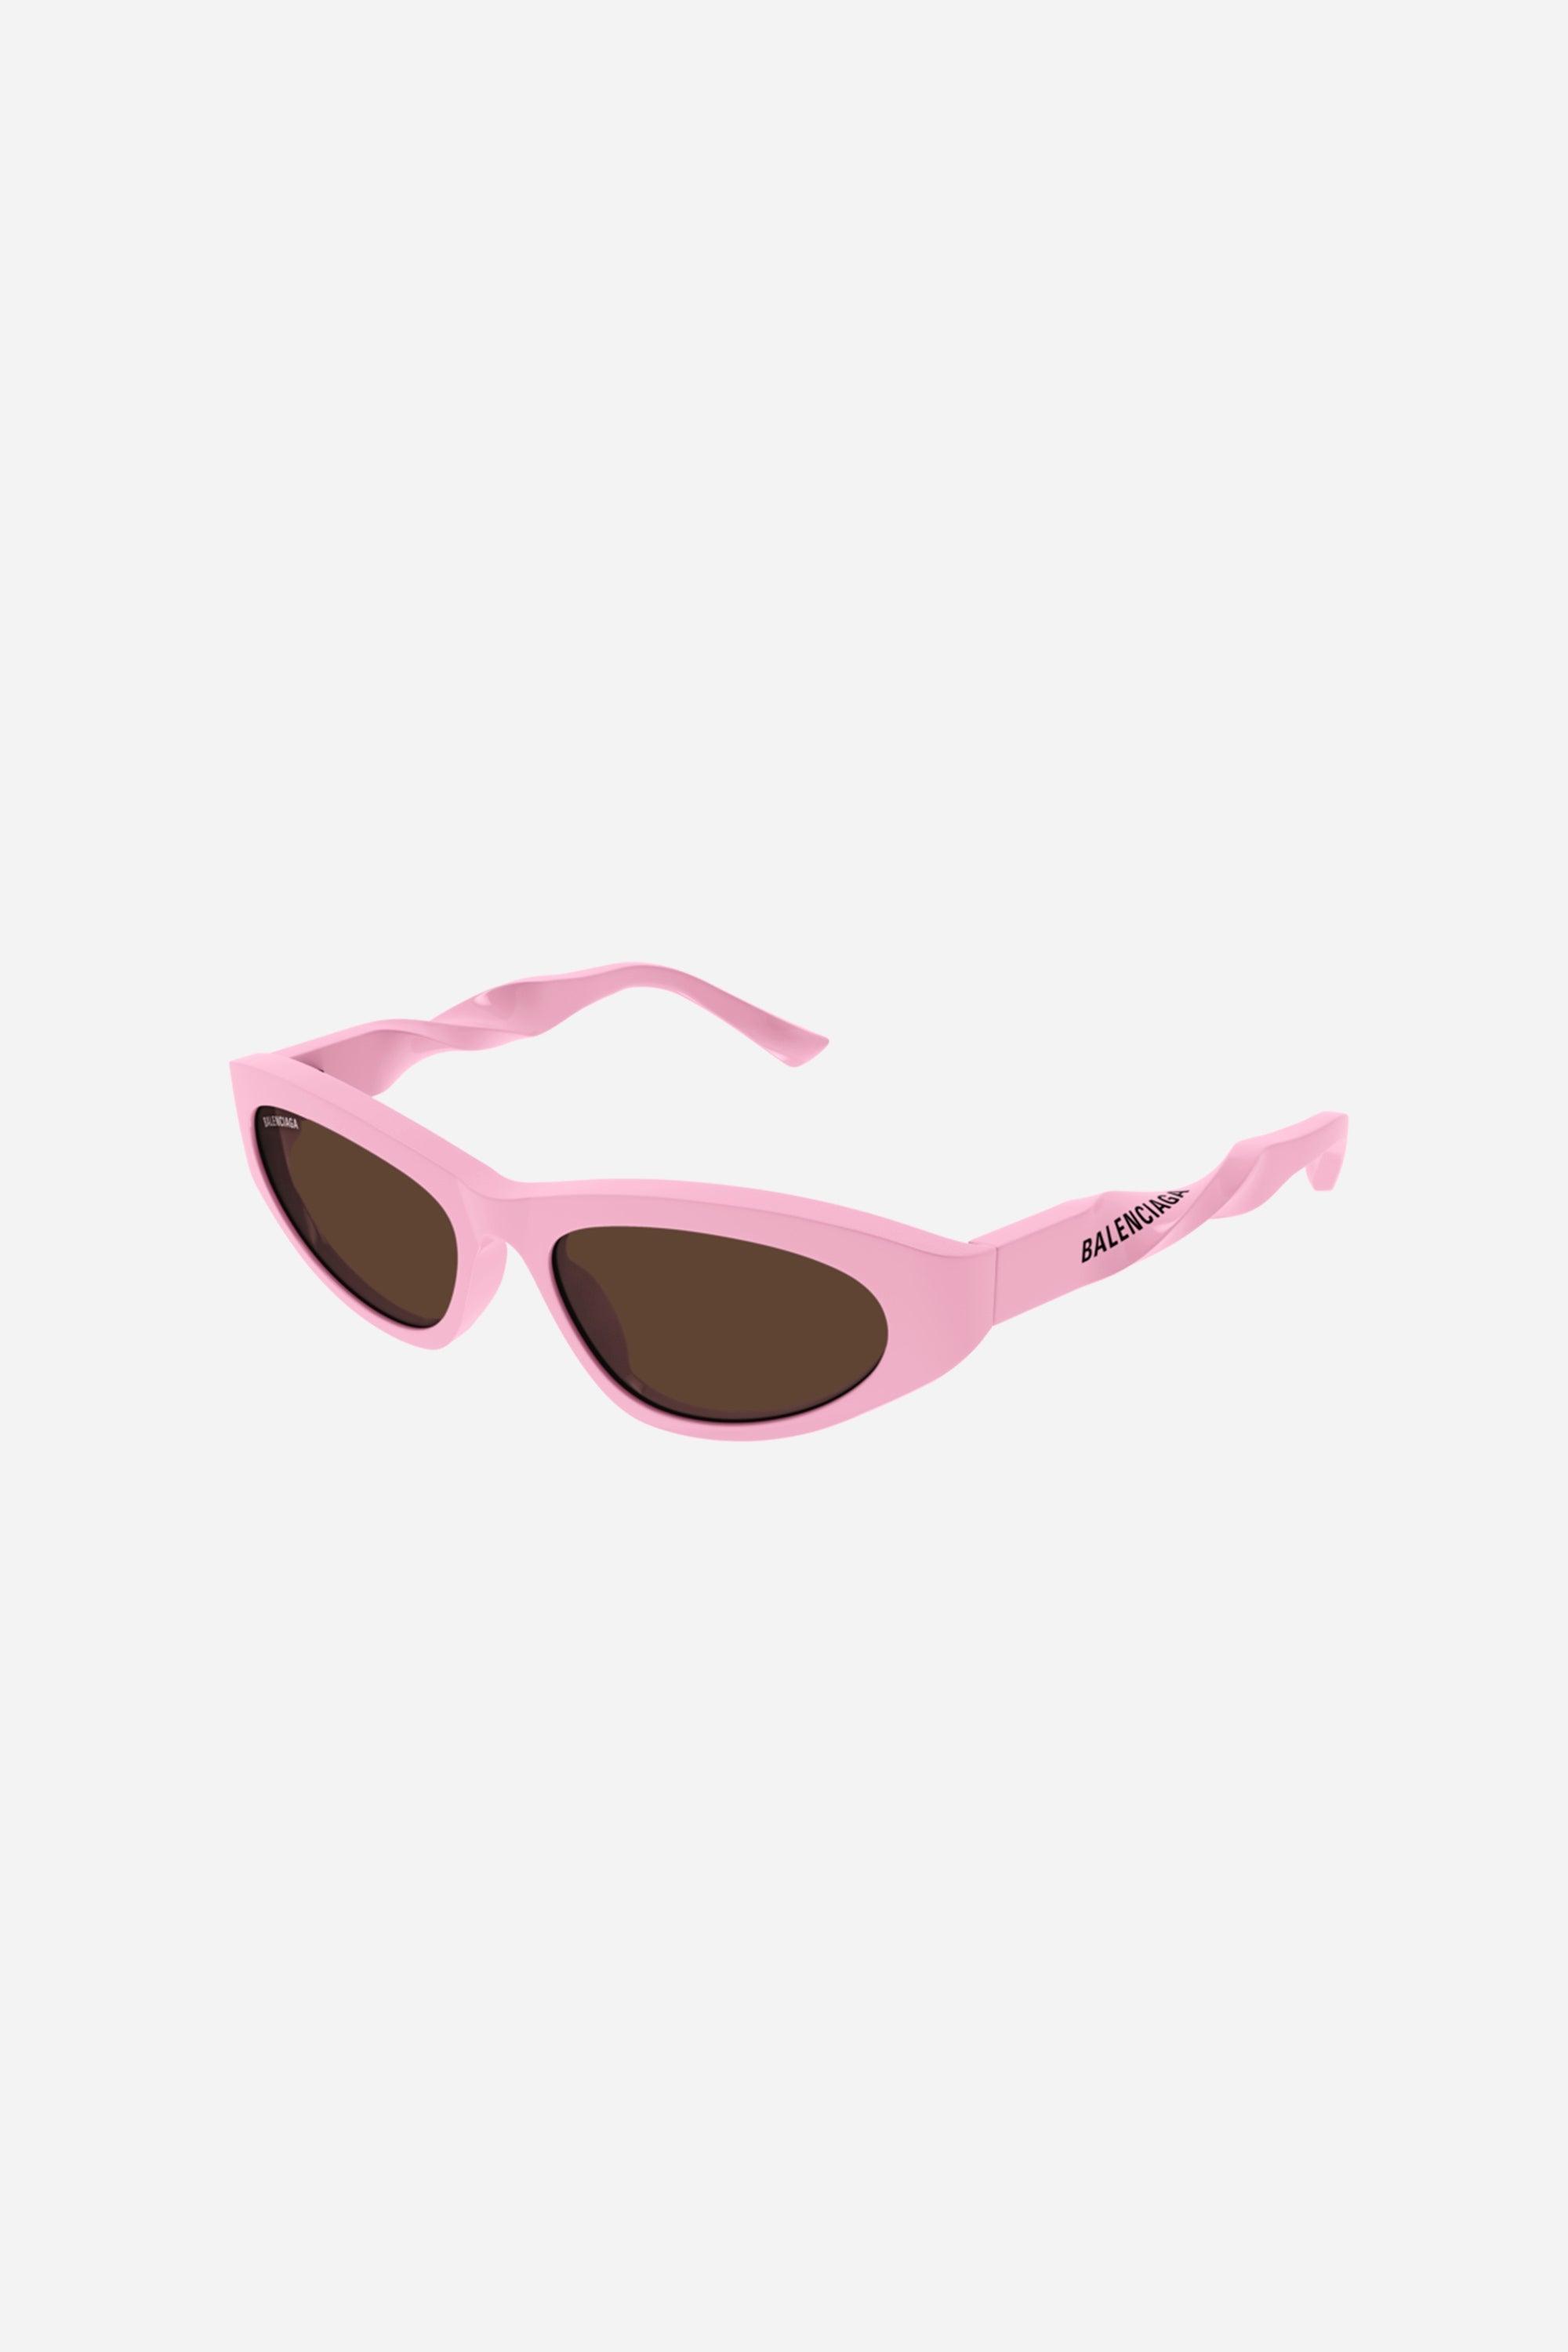 Balenciaga Baby Pink Twist Cat Eye Sunglasses | Lyst